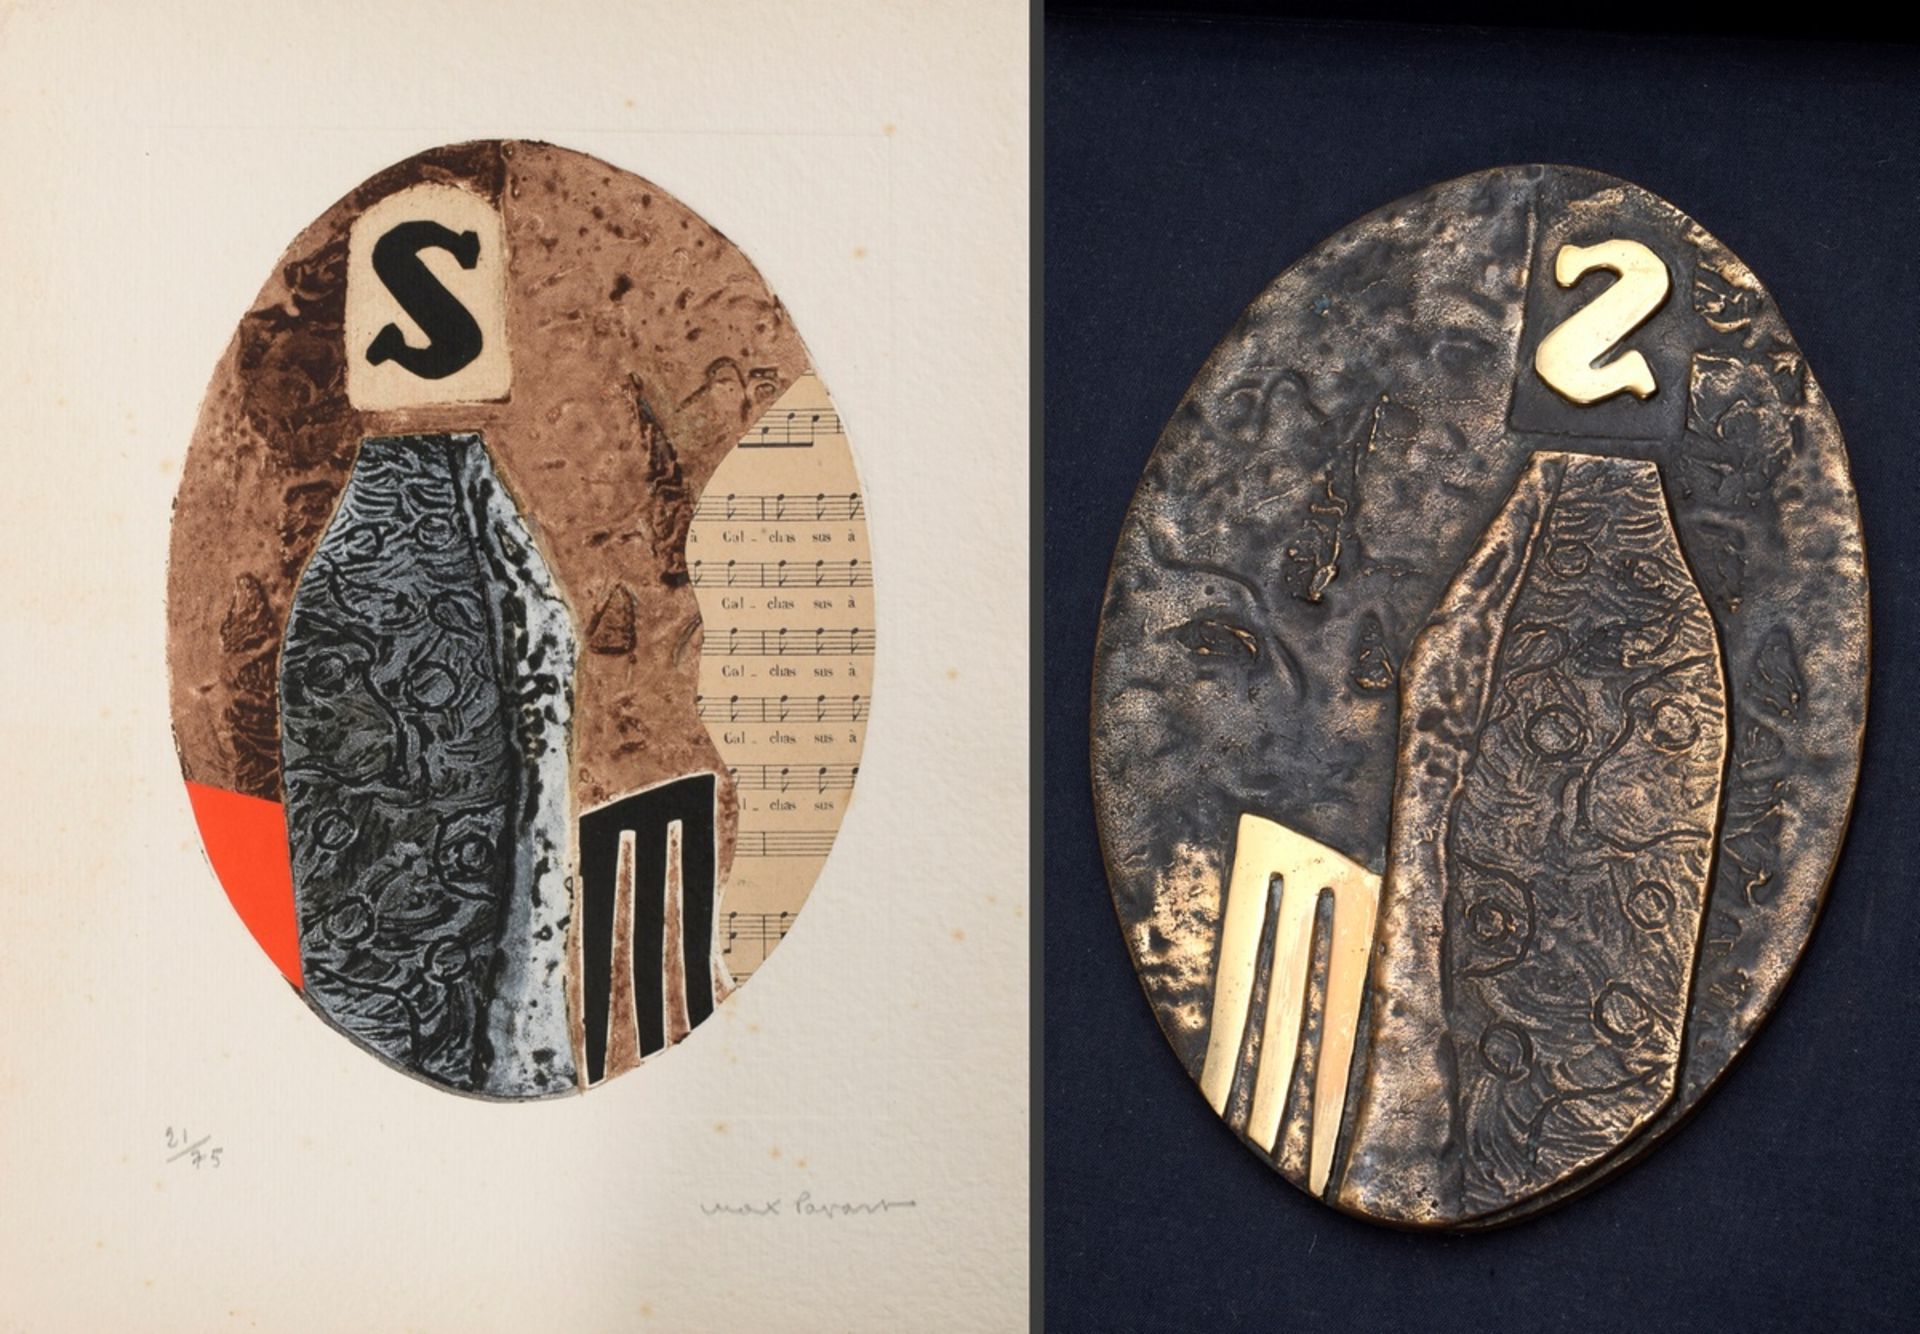 Papart, Max (1911-1994) "Pavane" 1977, bronze and etching/collage, 21/75, u. sign./num. SM 33x26cm,